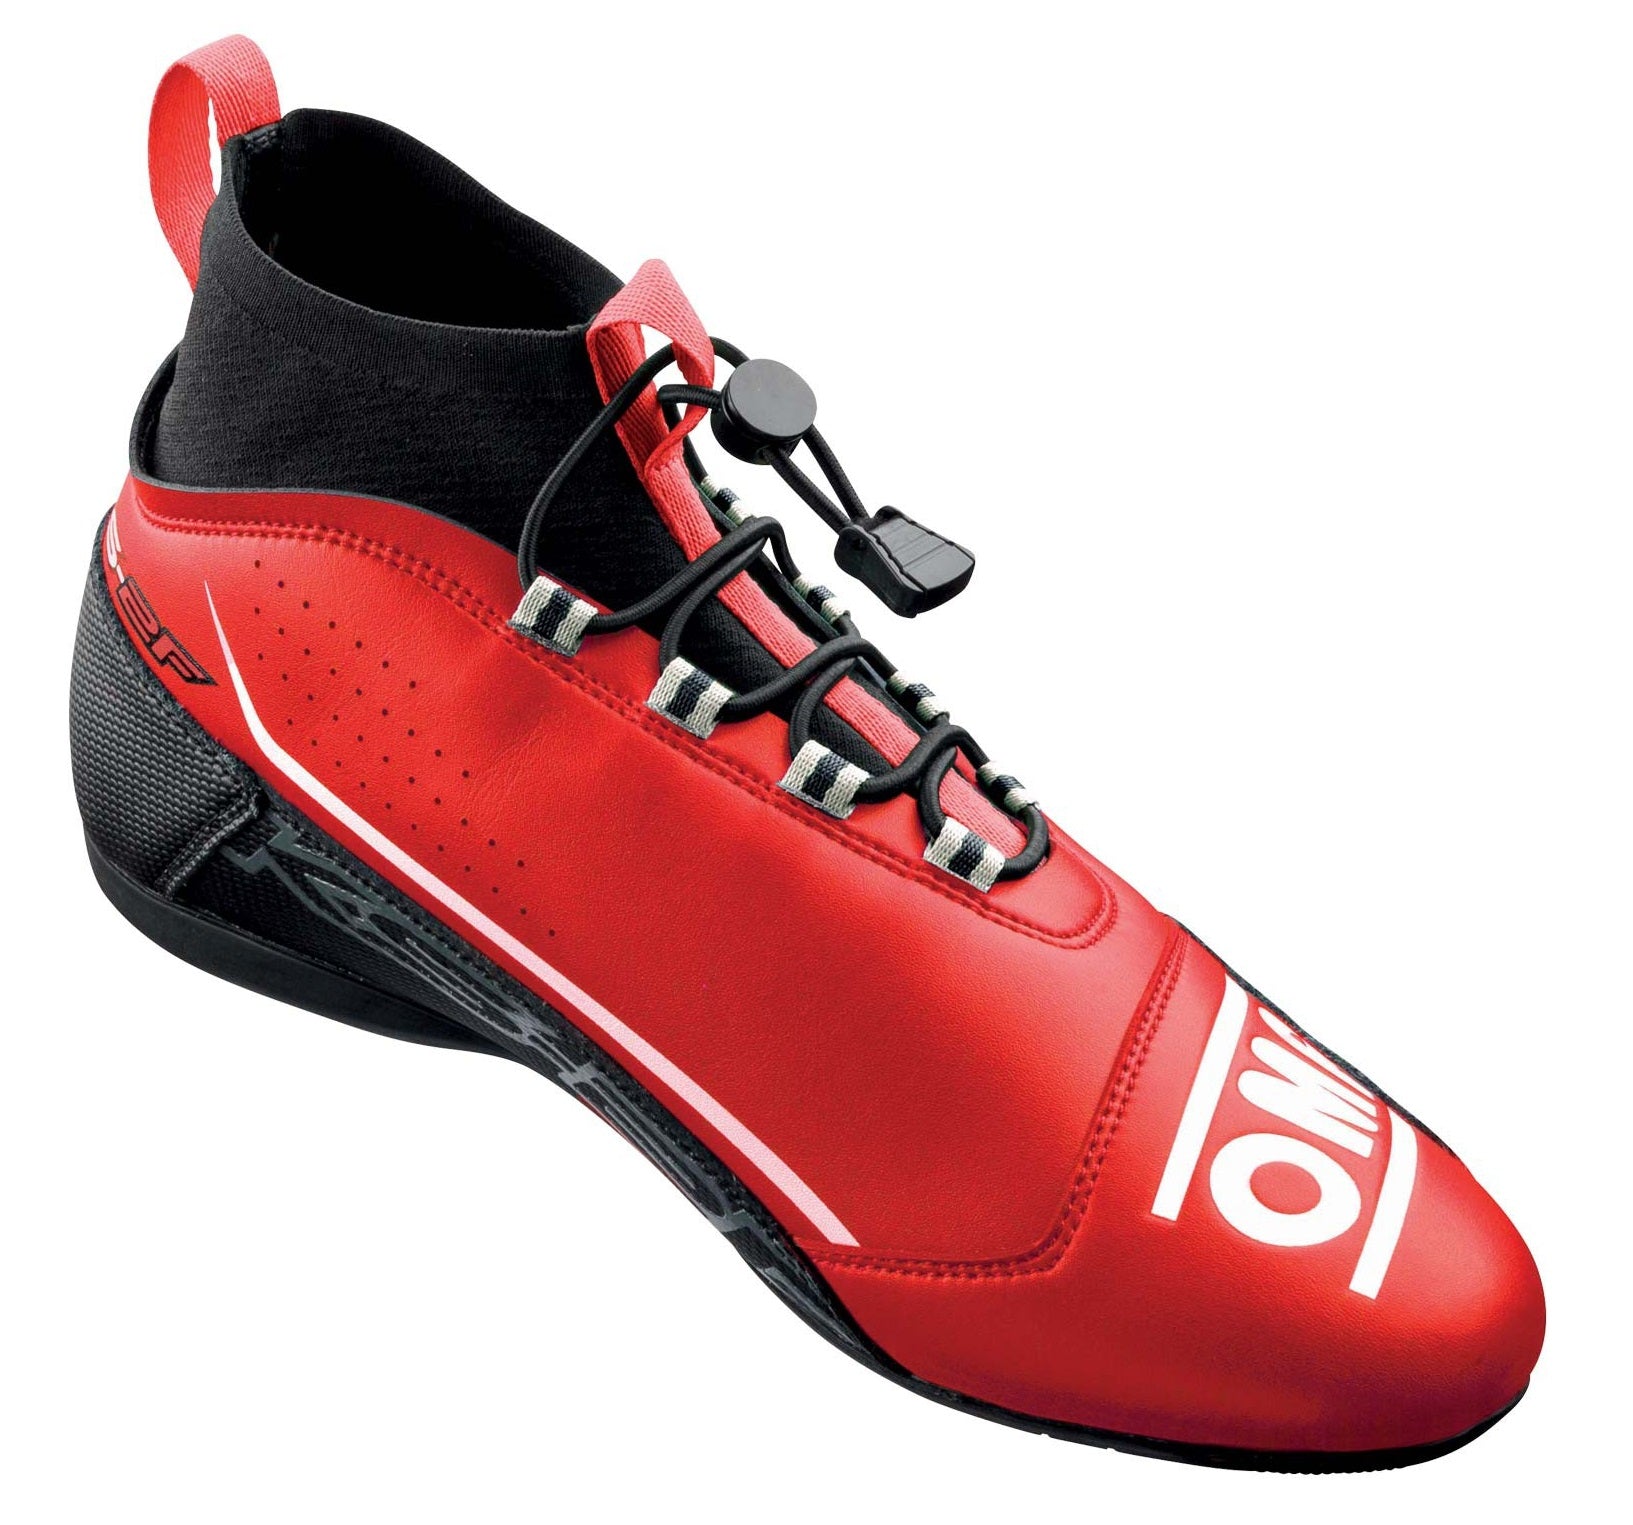 OMP KC0-0830-A01-060-42 KS-2F Karting shoes, red/black, size 42 Photo-1 